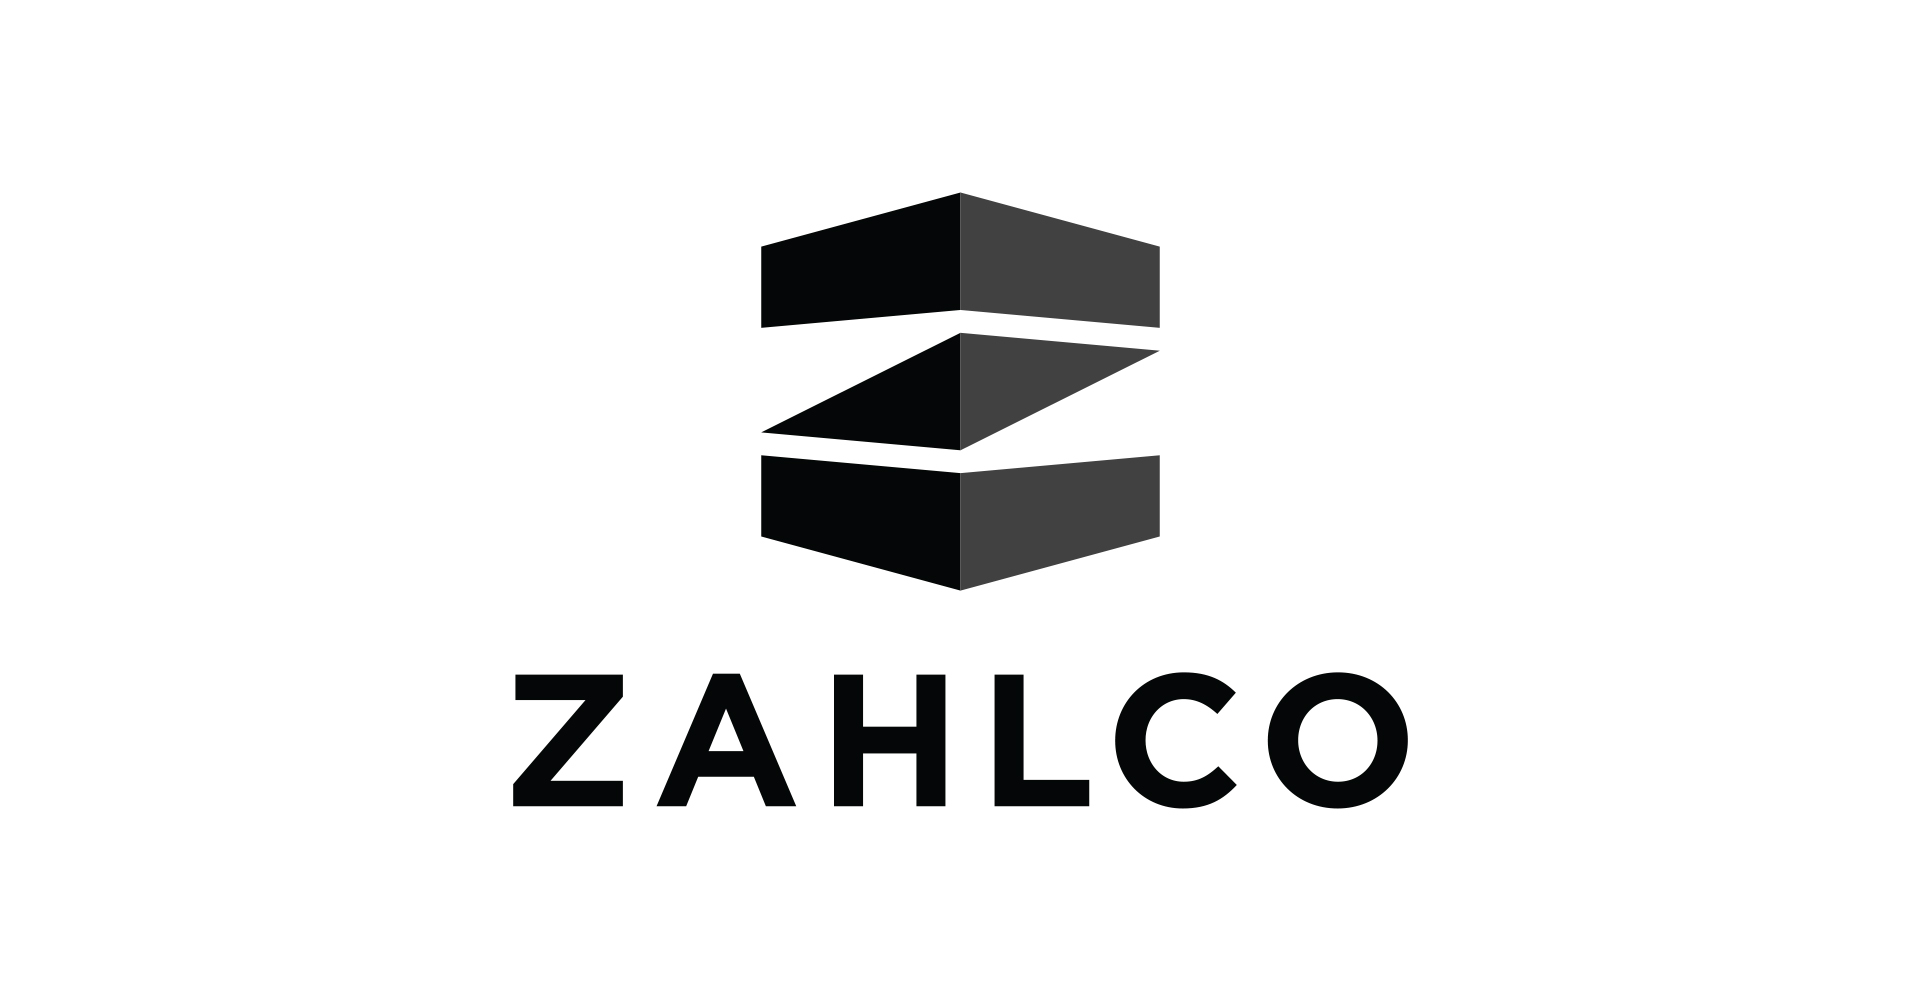 Zahlco logo